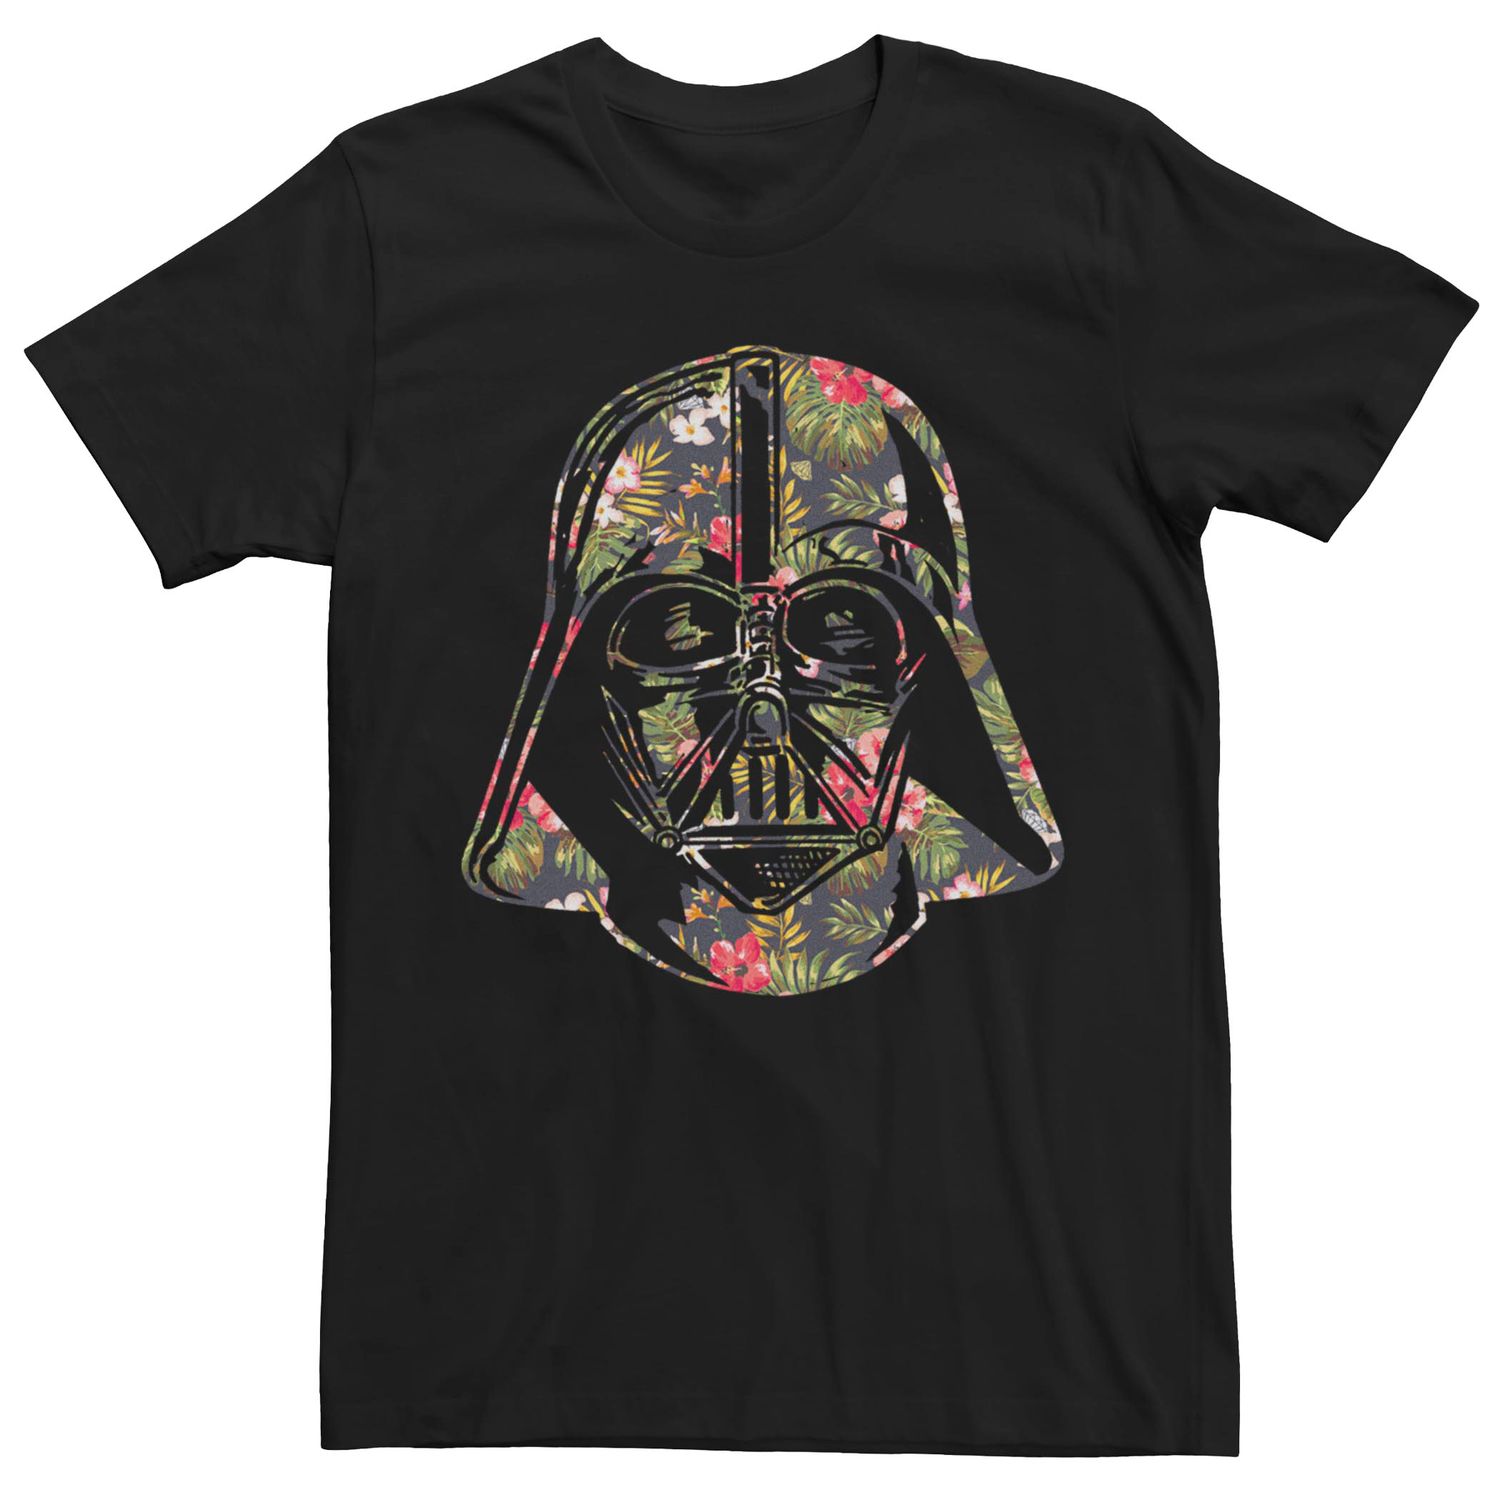 Мужская футболка со шлемом Дарта Вейдера «Звездные войны» Licensed Character, черный мужская футболка со звездами и шлемом дарта вейдера звездные войны licensed character